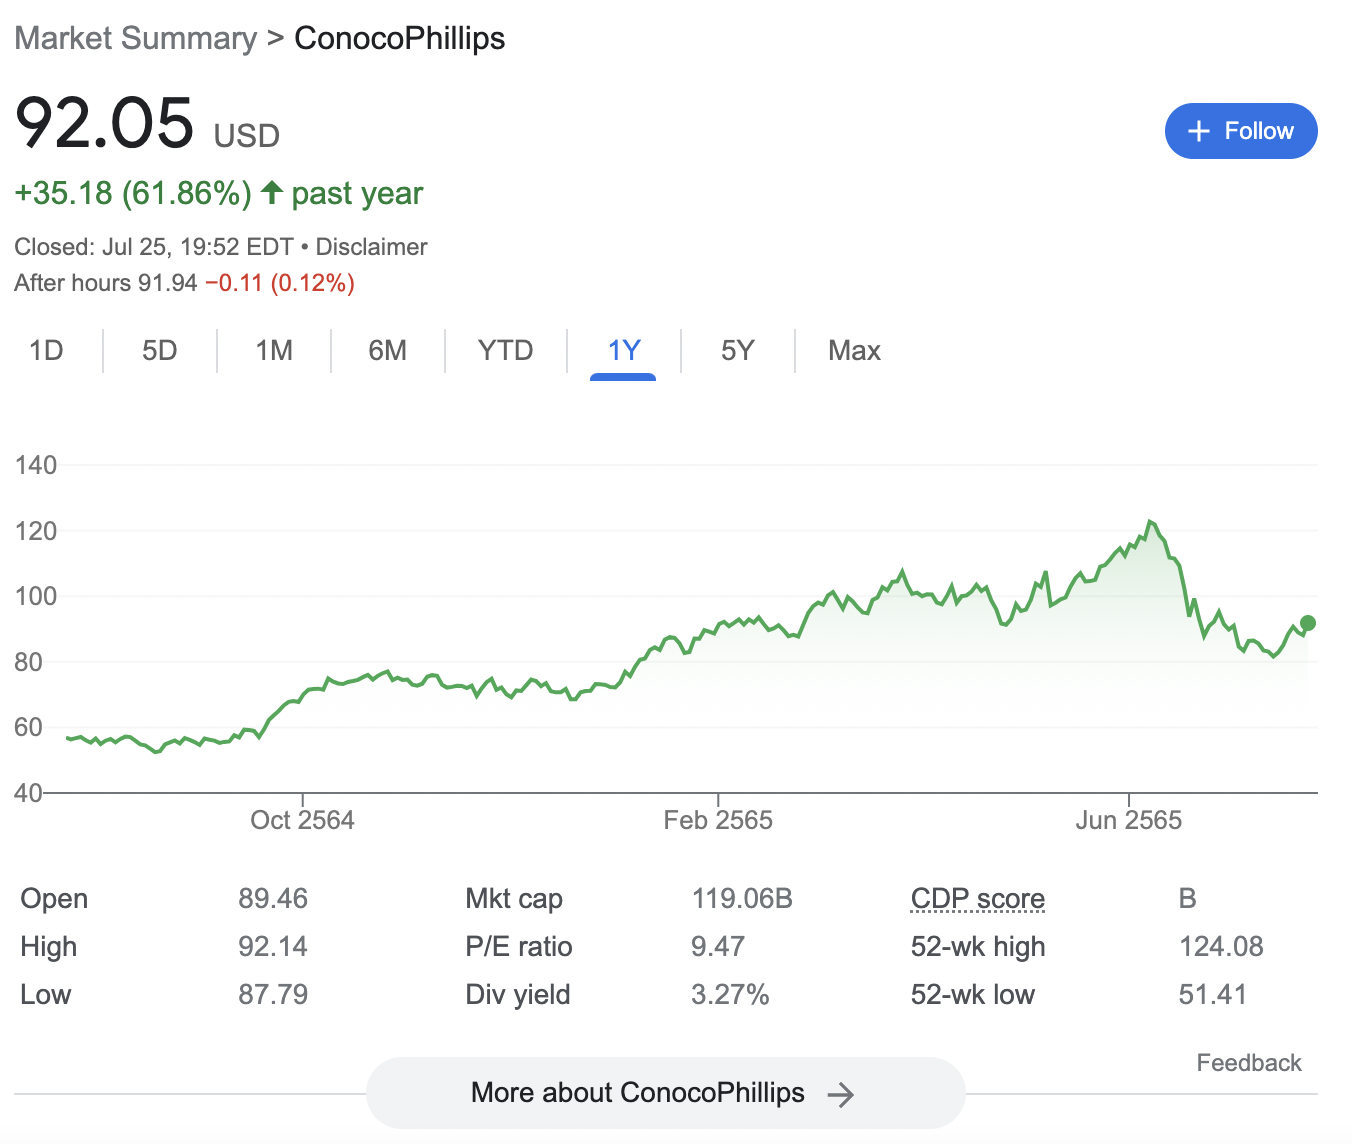 ConocoPhillips stock